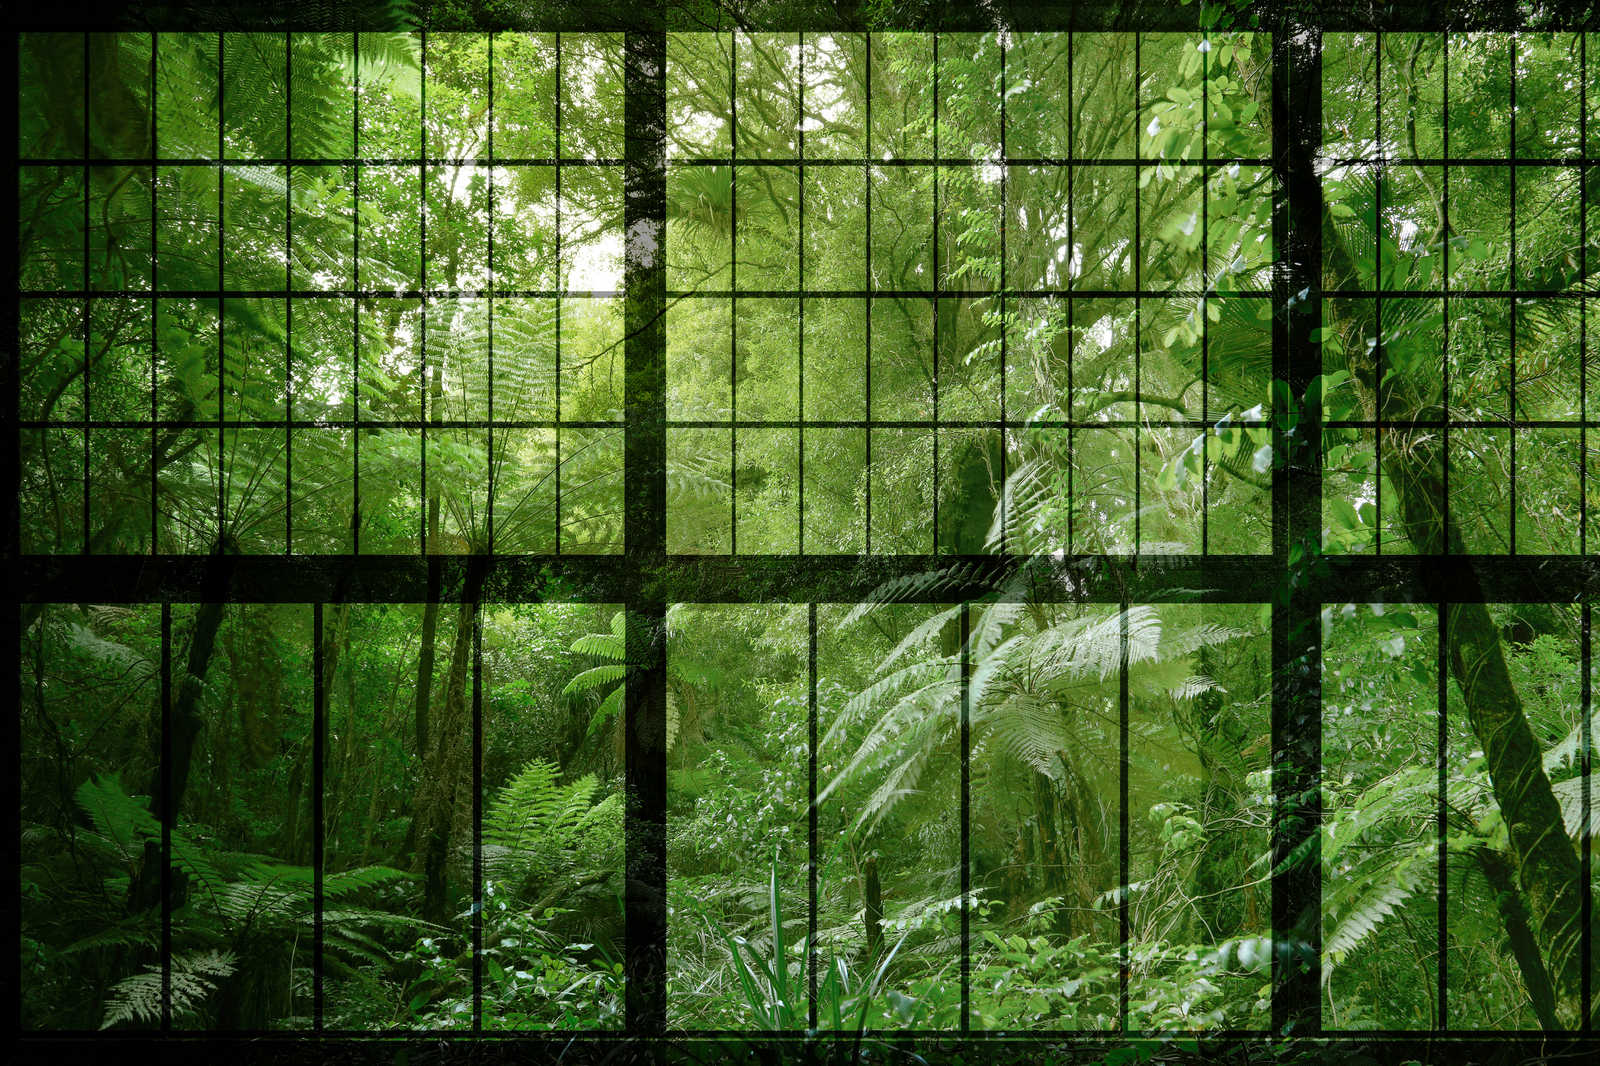             Rainforest 2 - Loft window canvas painting with jungle view - 0.90 m x 0.60 m
        